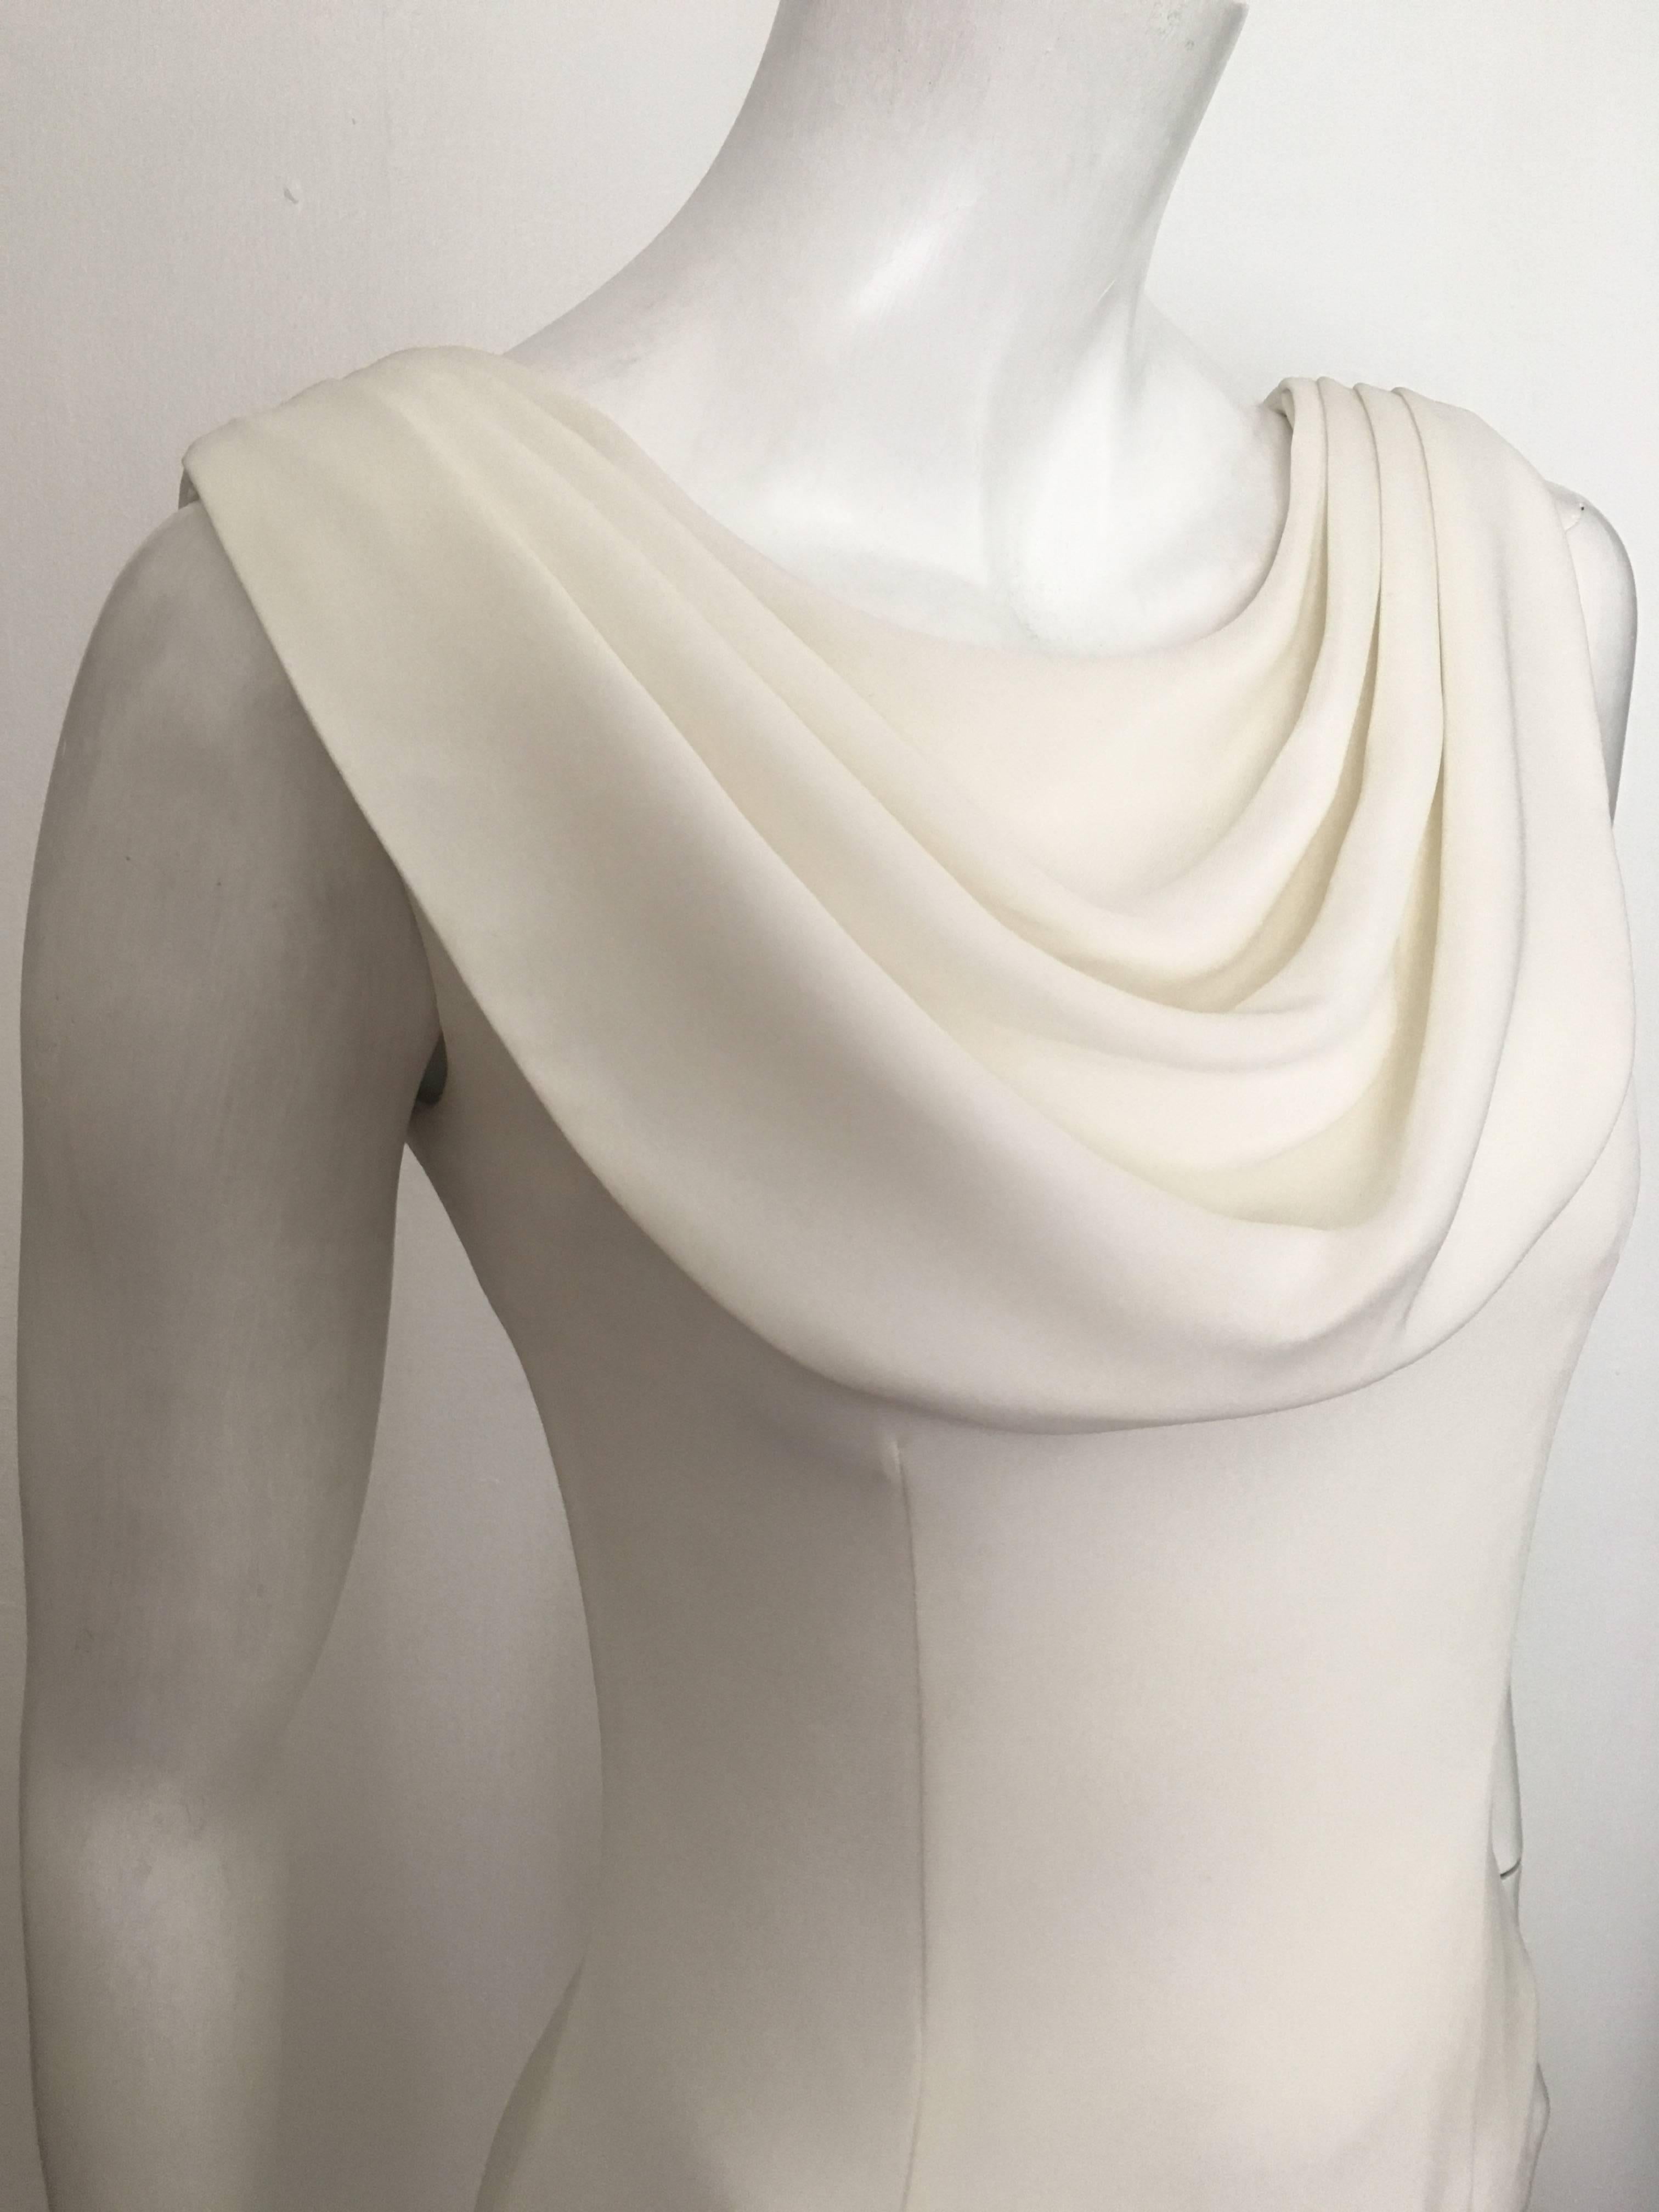 Scaasi Off White Long Sheath Evening Dress Size 4. 4